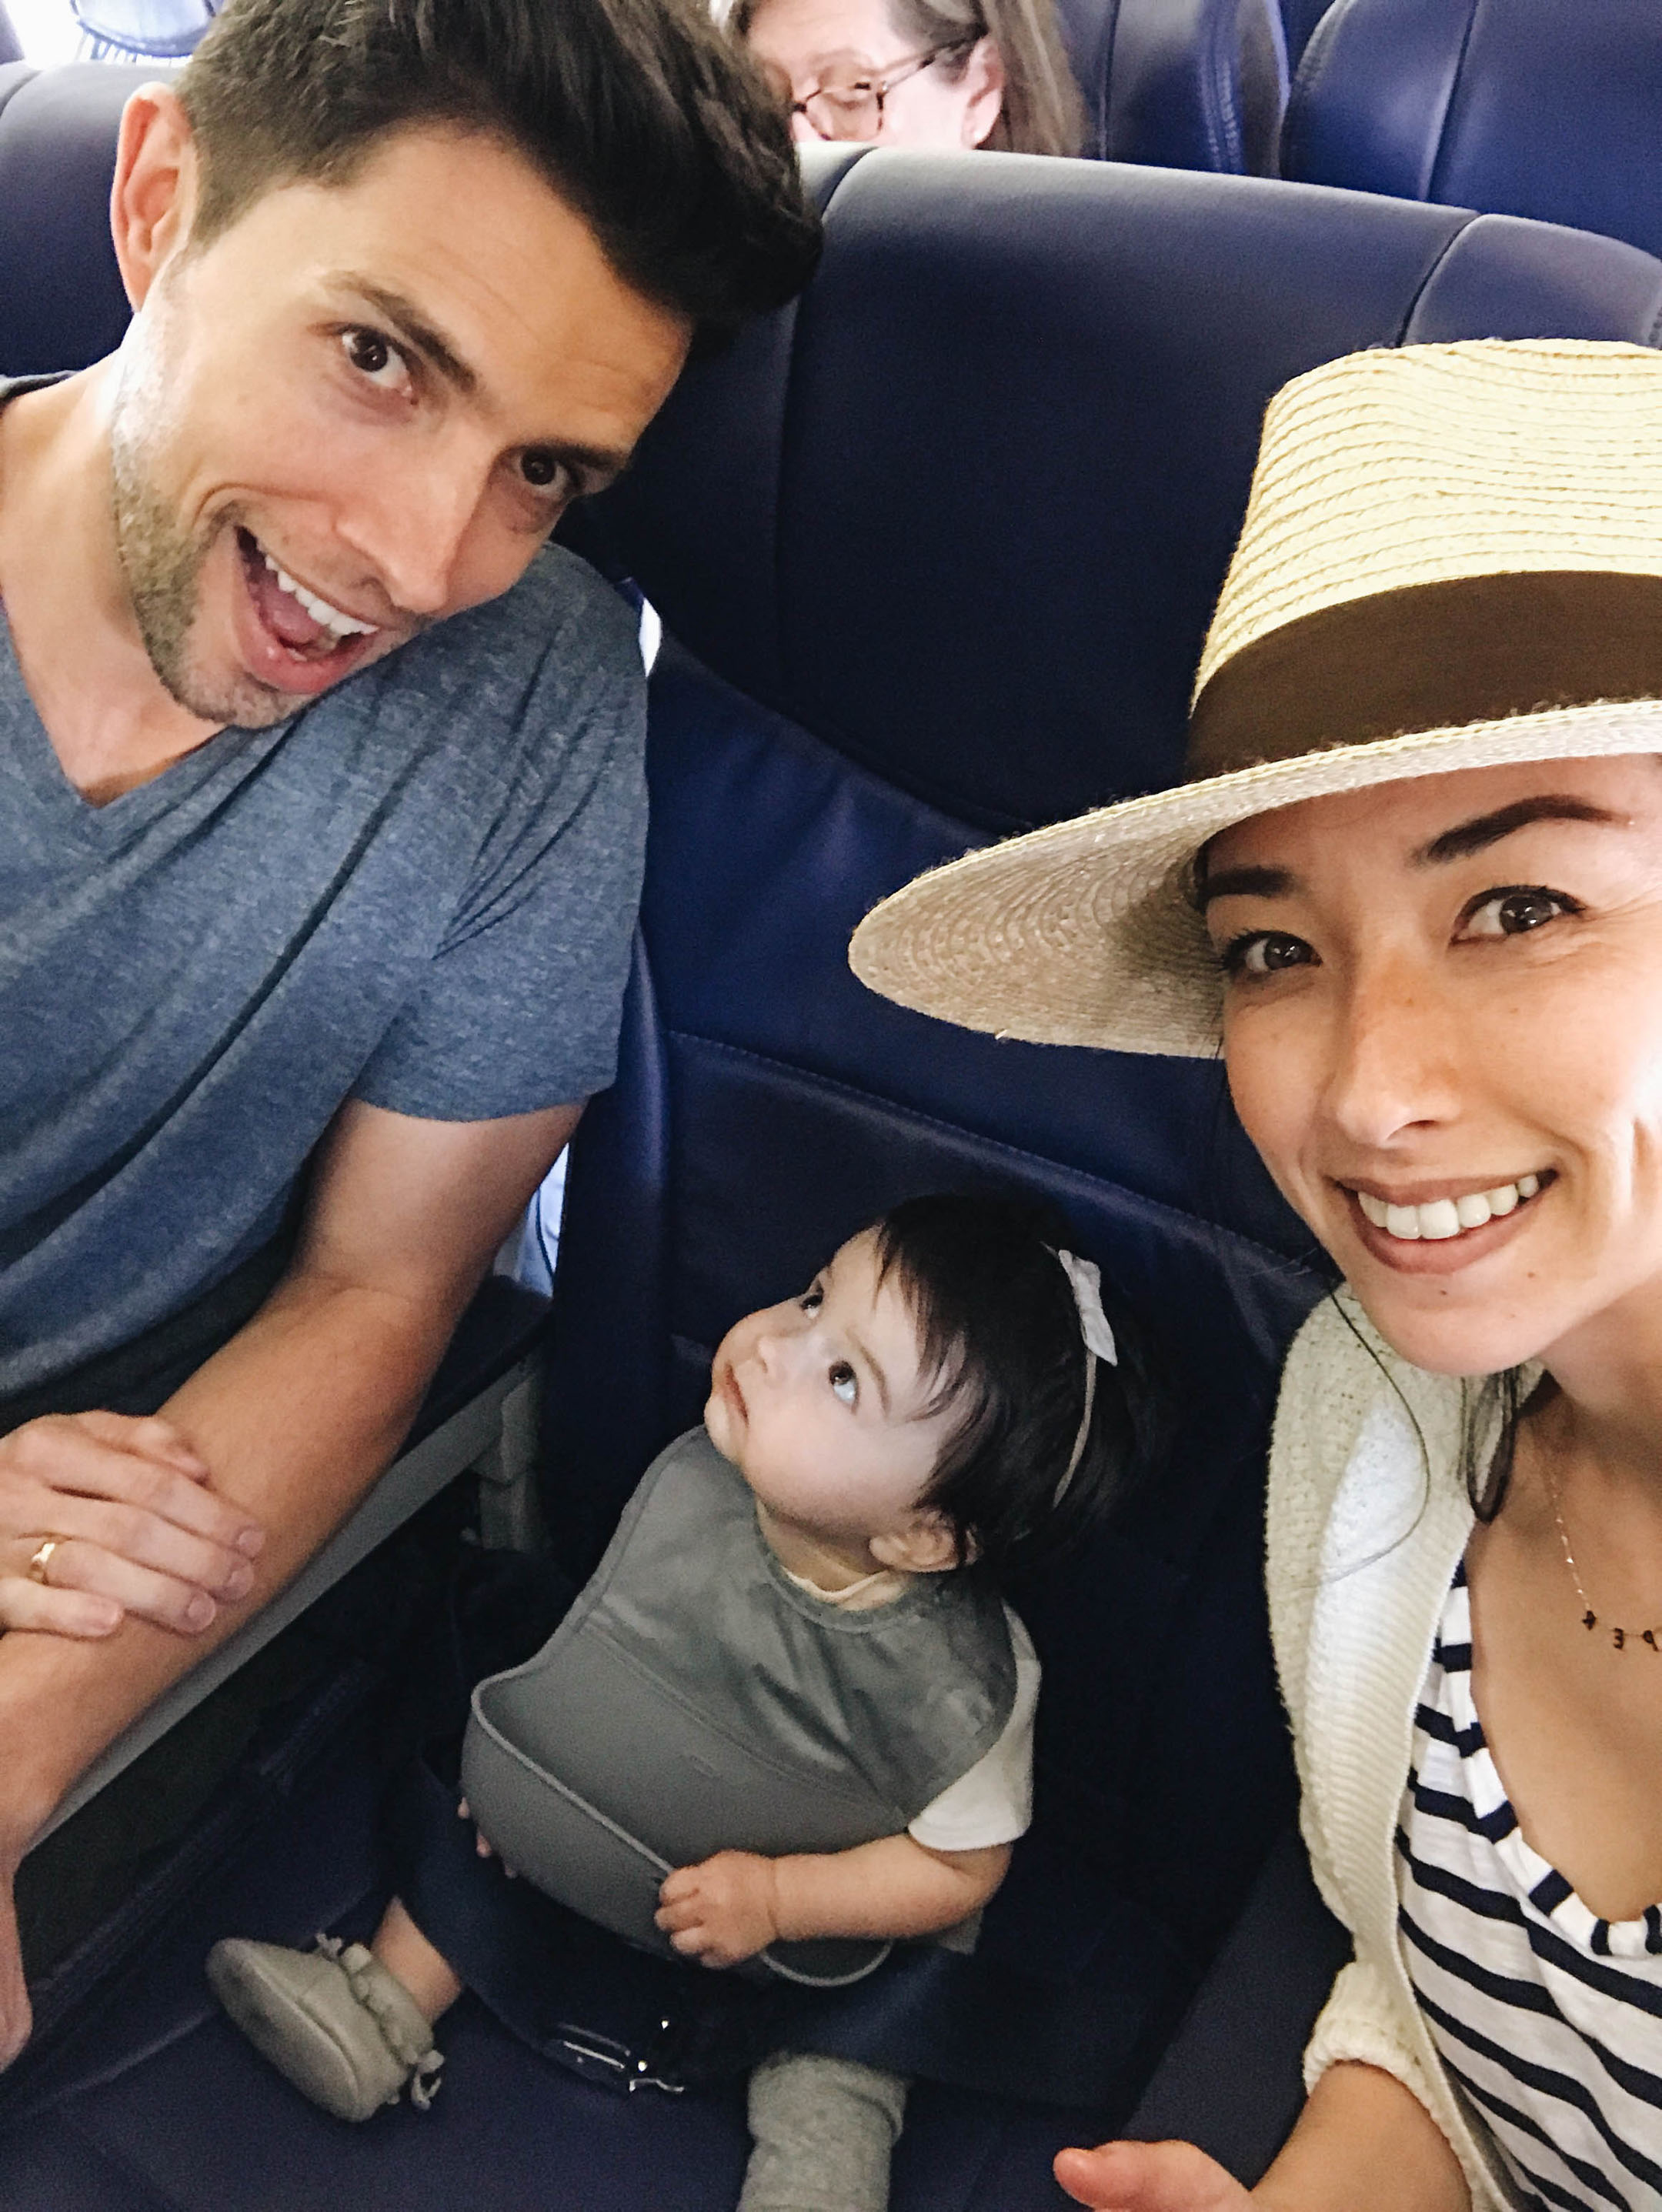 Baby on plane 1